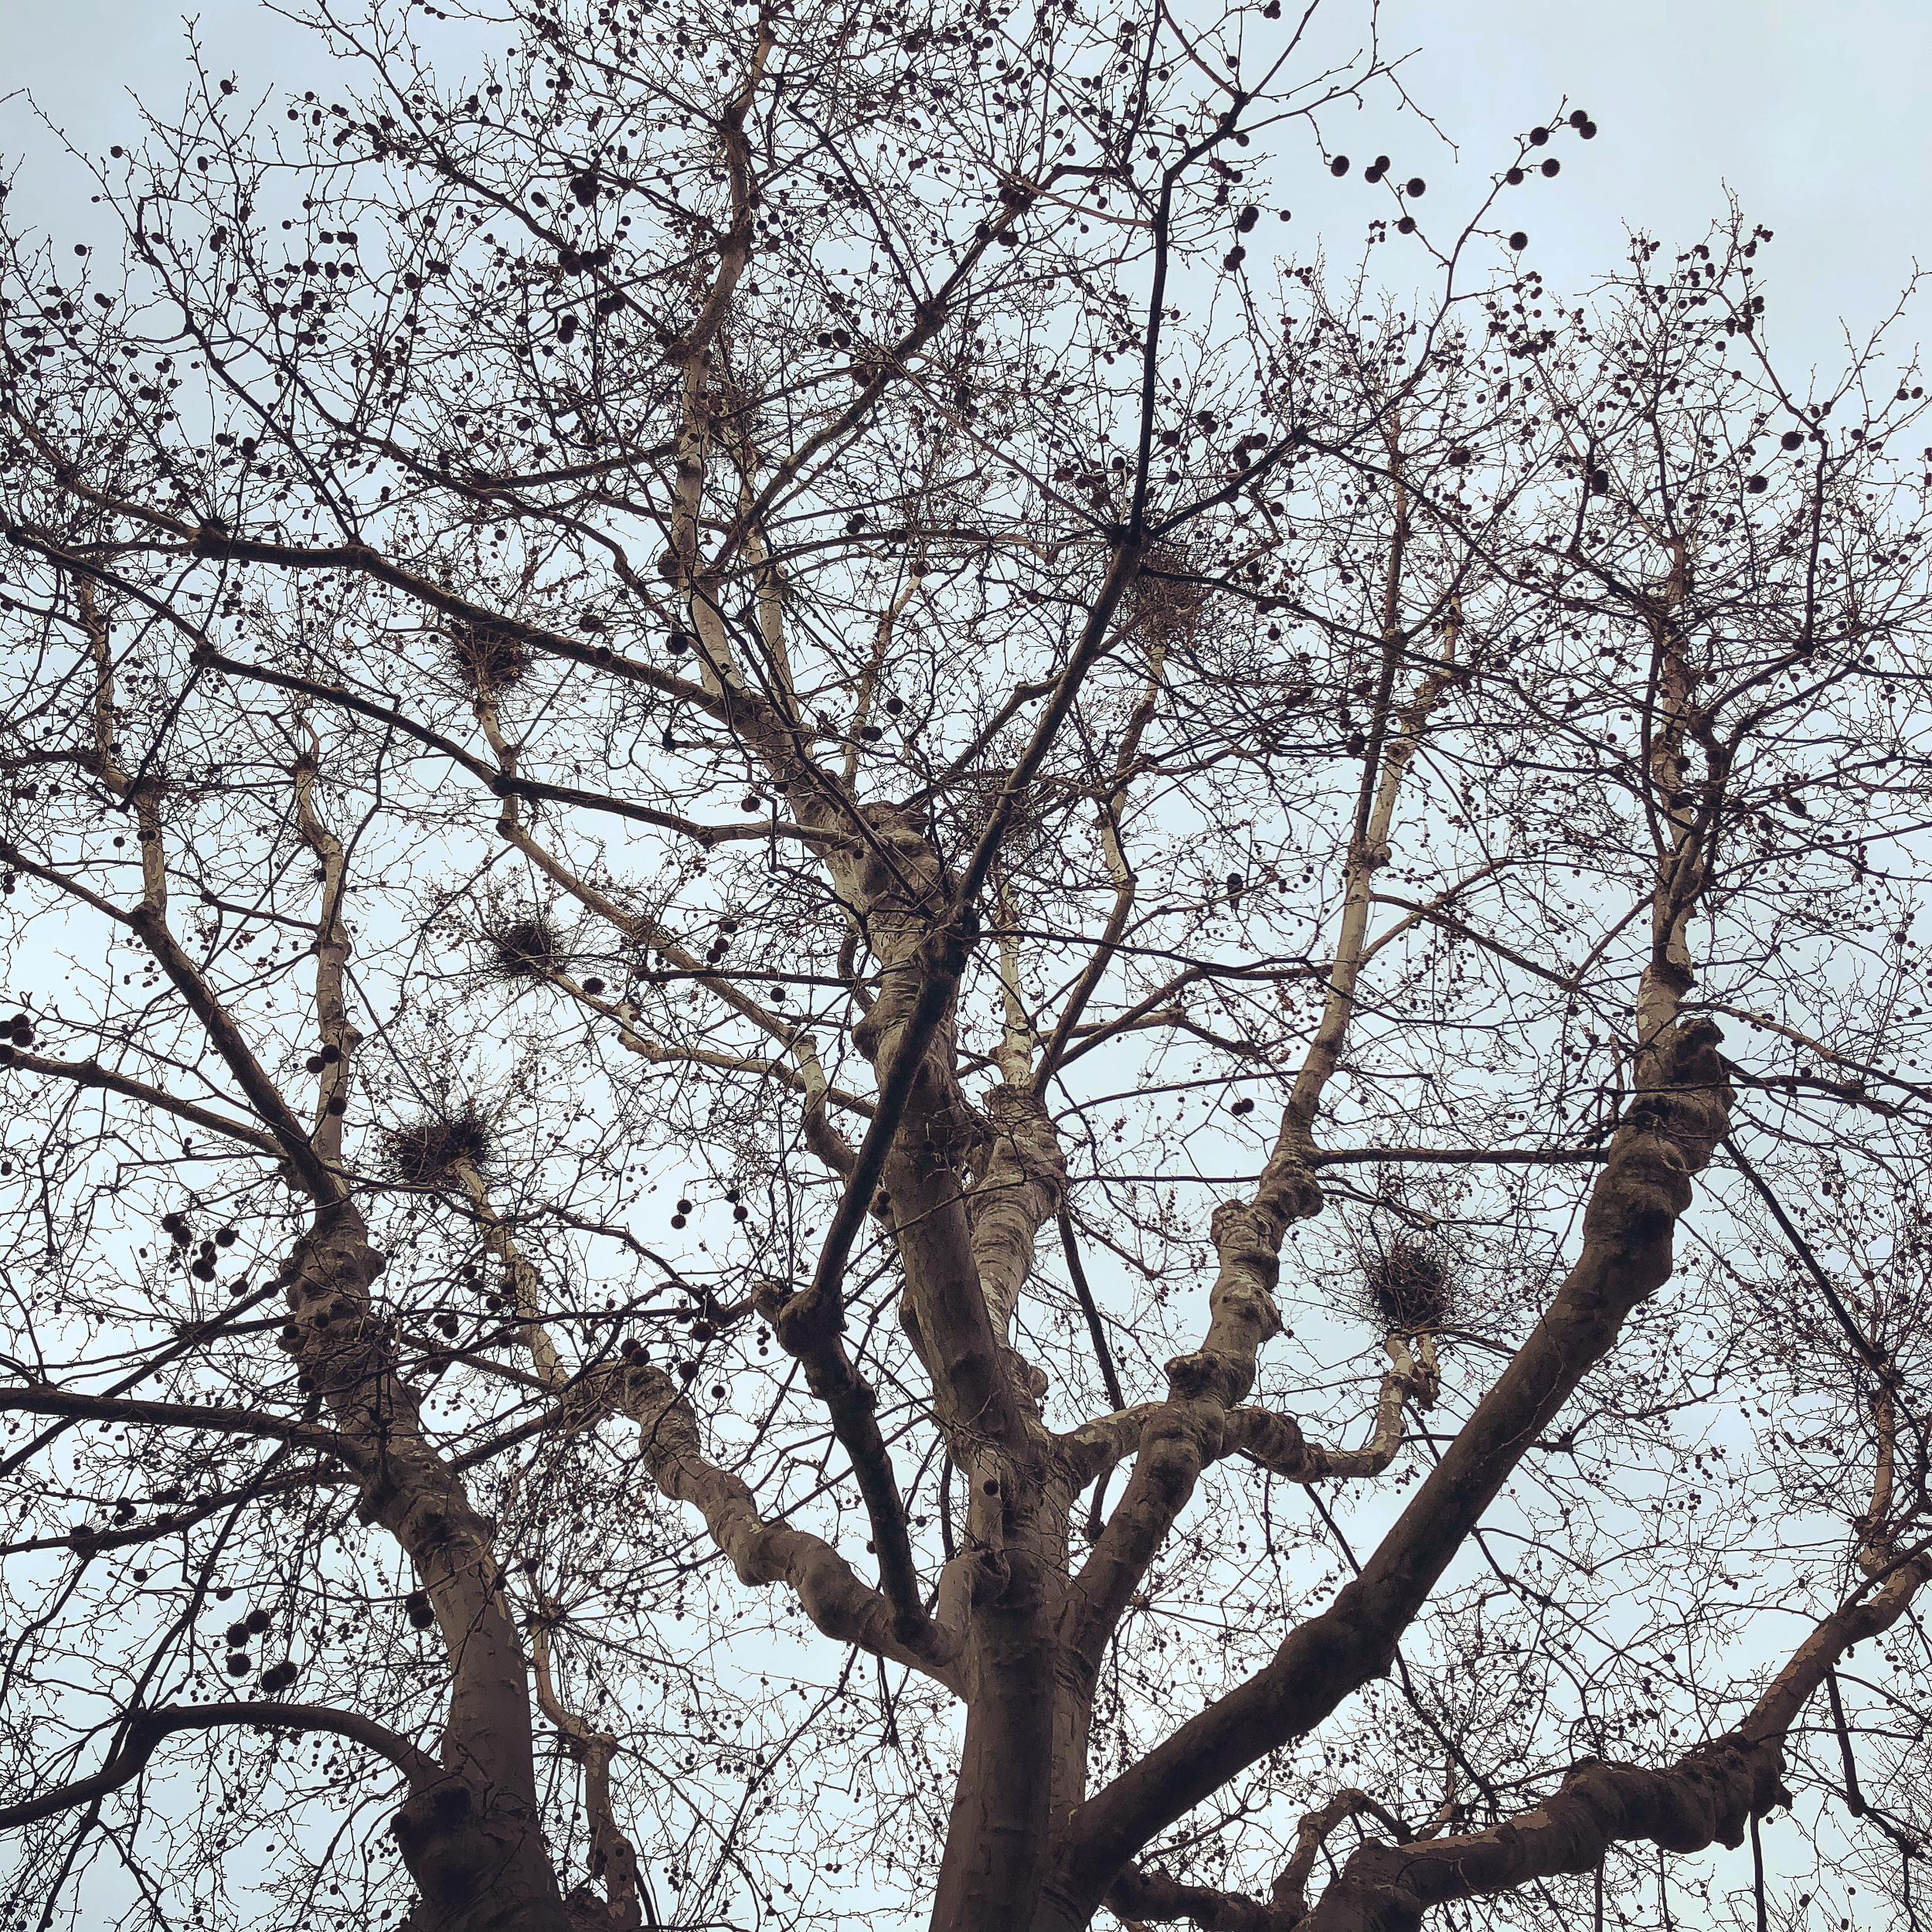 Bird’s nests